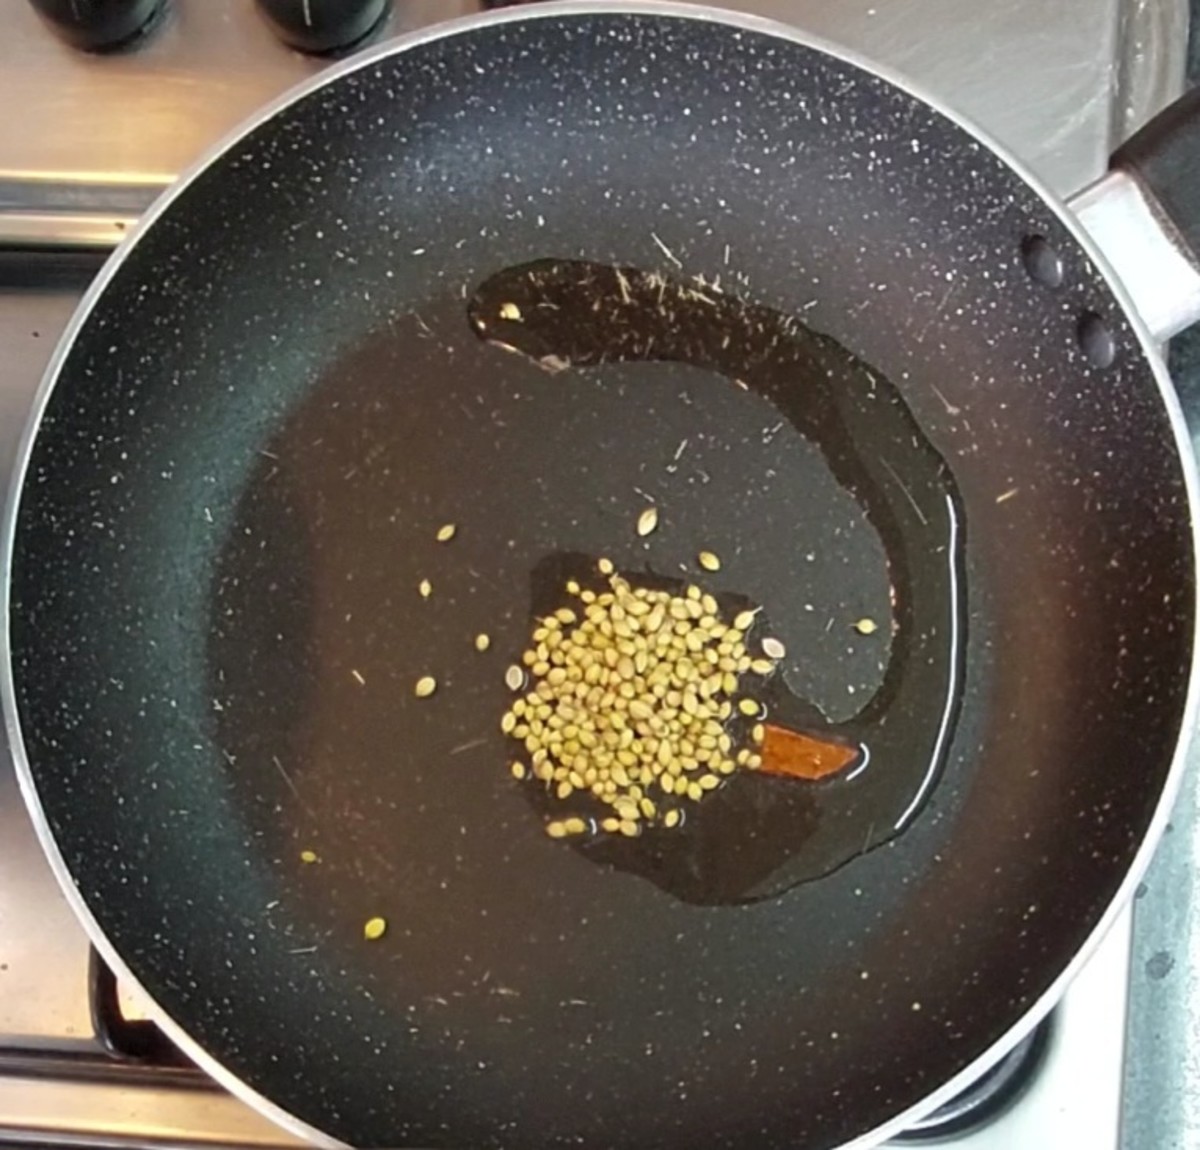 In a frying pan, heat 1 teaspoon oil. Add 1 inch cinnamon and 1 teaspoon coriander seeds.